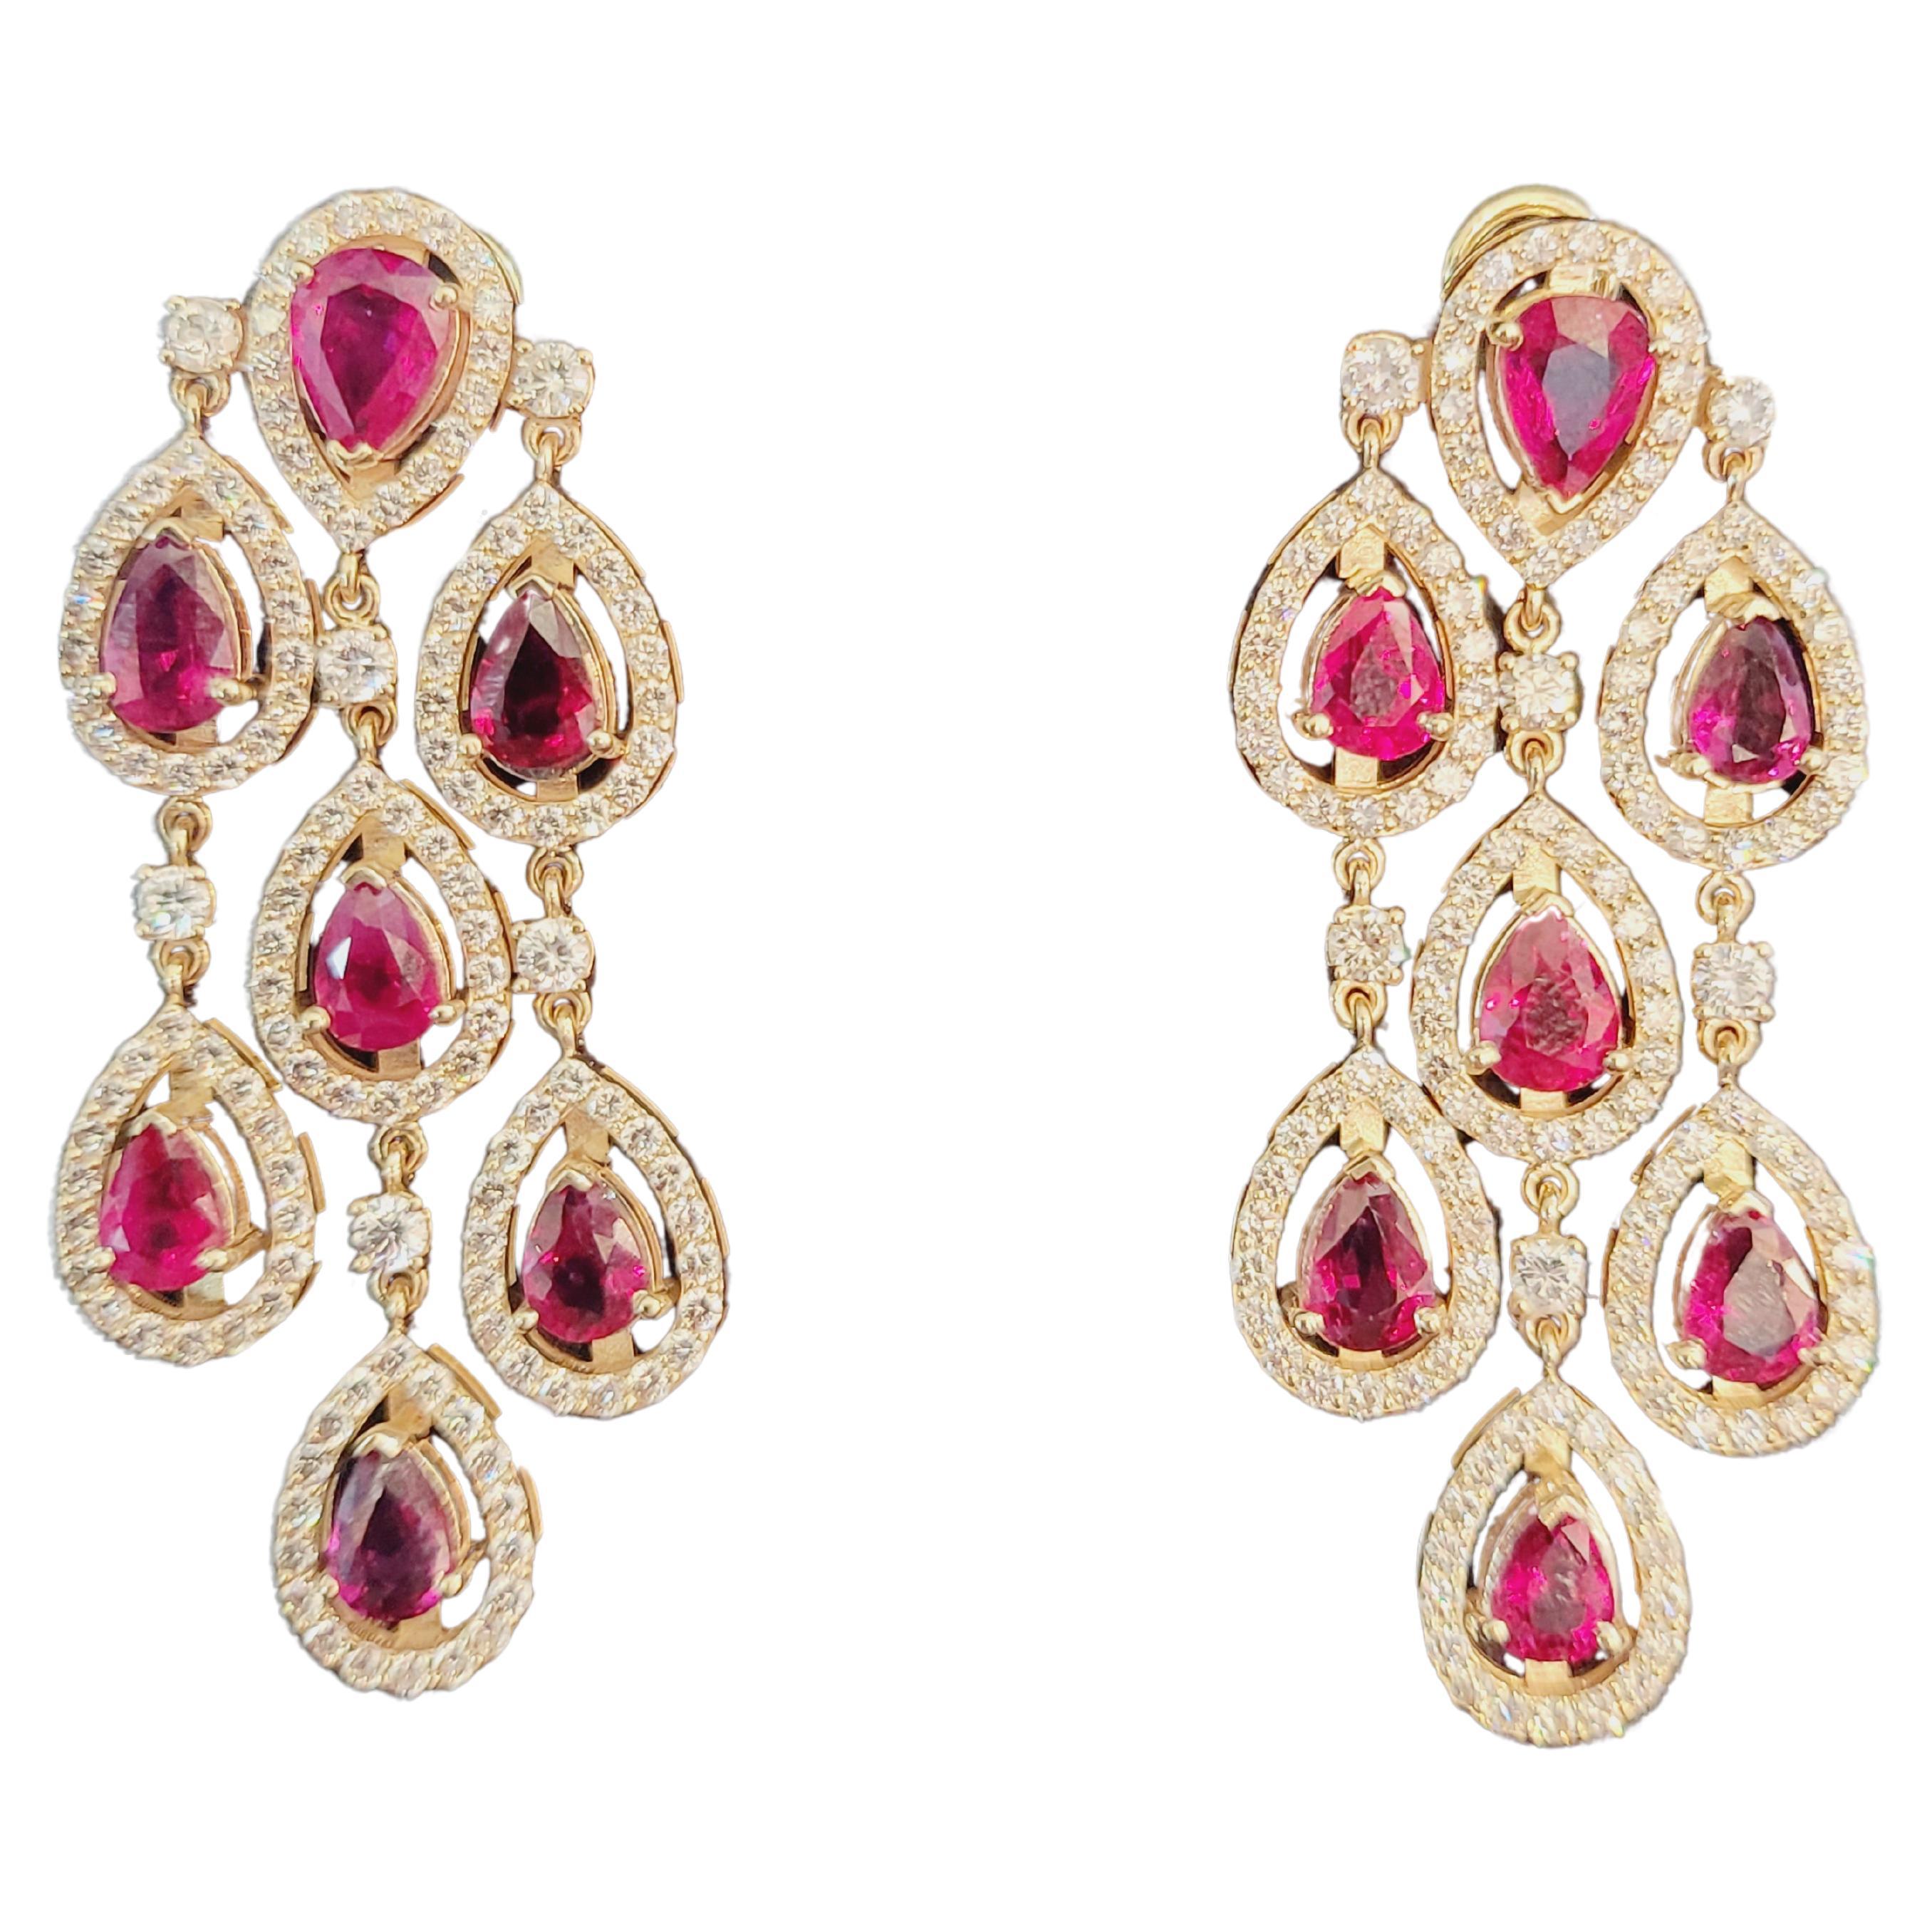 Ruby and Diamonds Dangle Earrings in 14K Yellow Gold